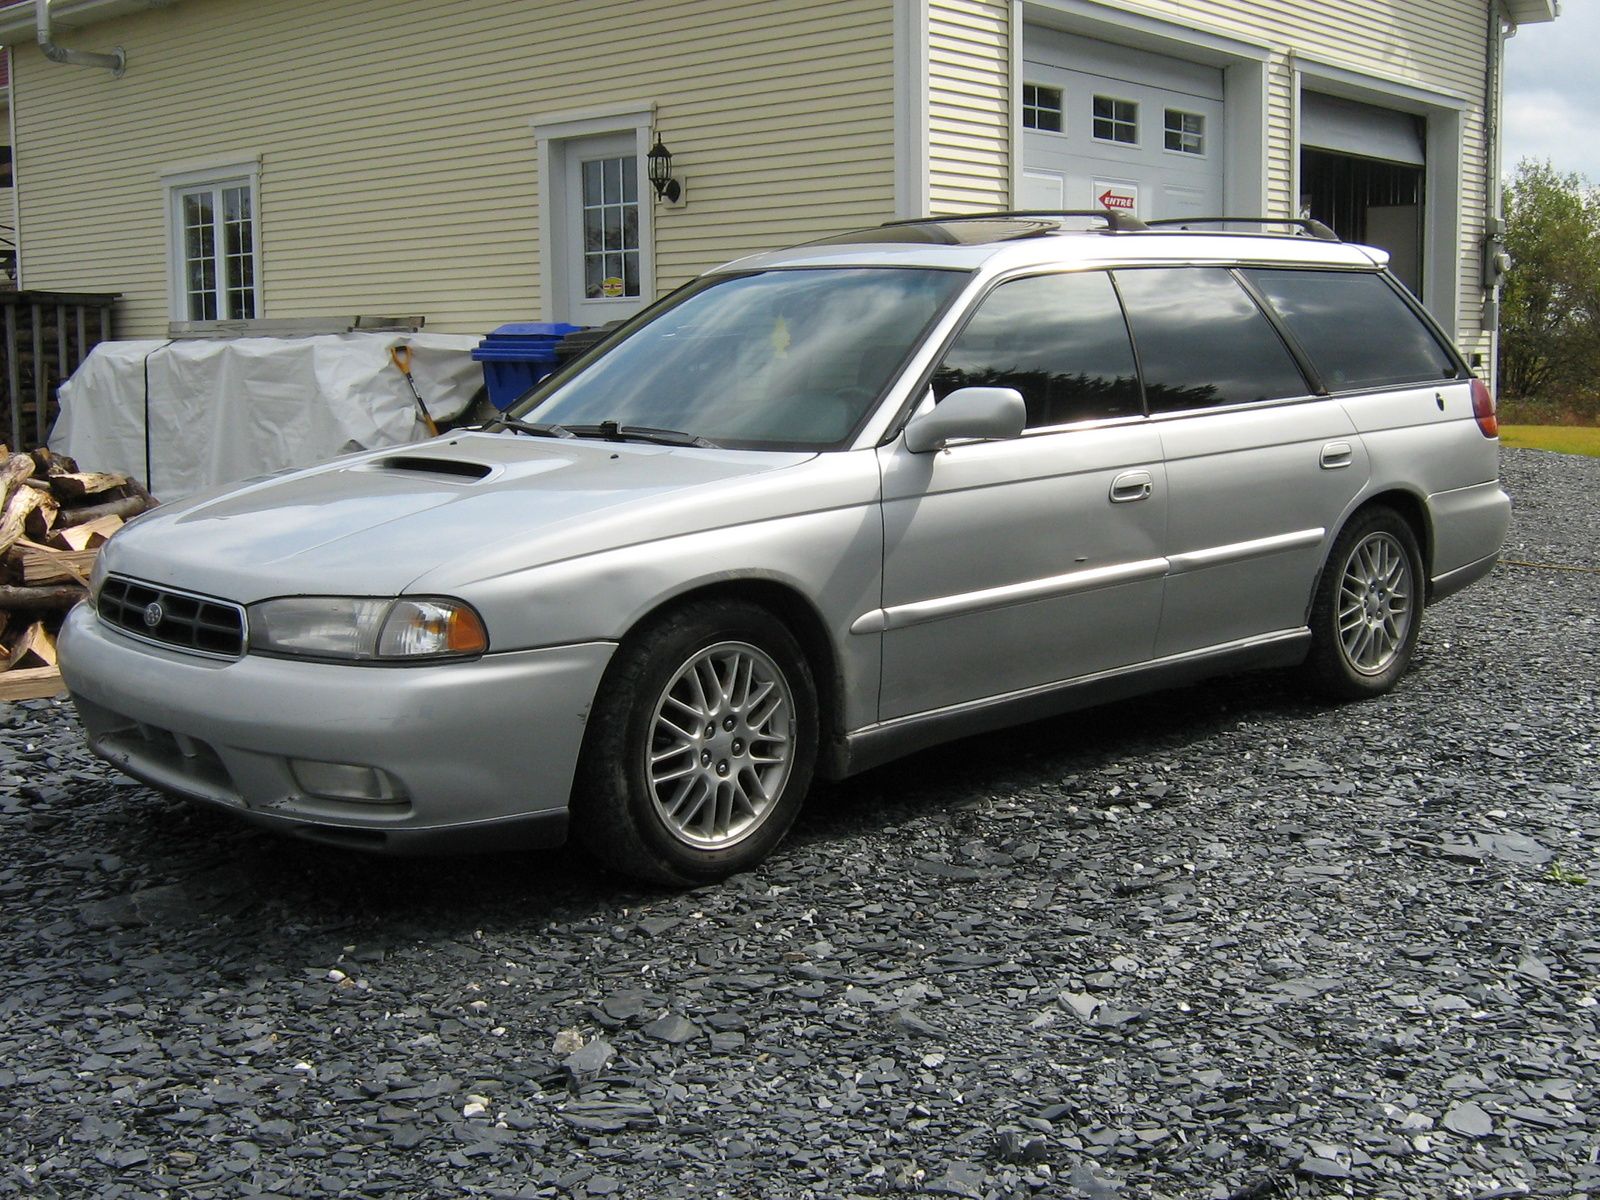 1998 Subaru Legacy Wagon L 0-60 Times, Top Speed, Specs, Quarter Mile